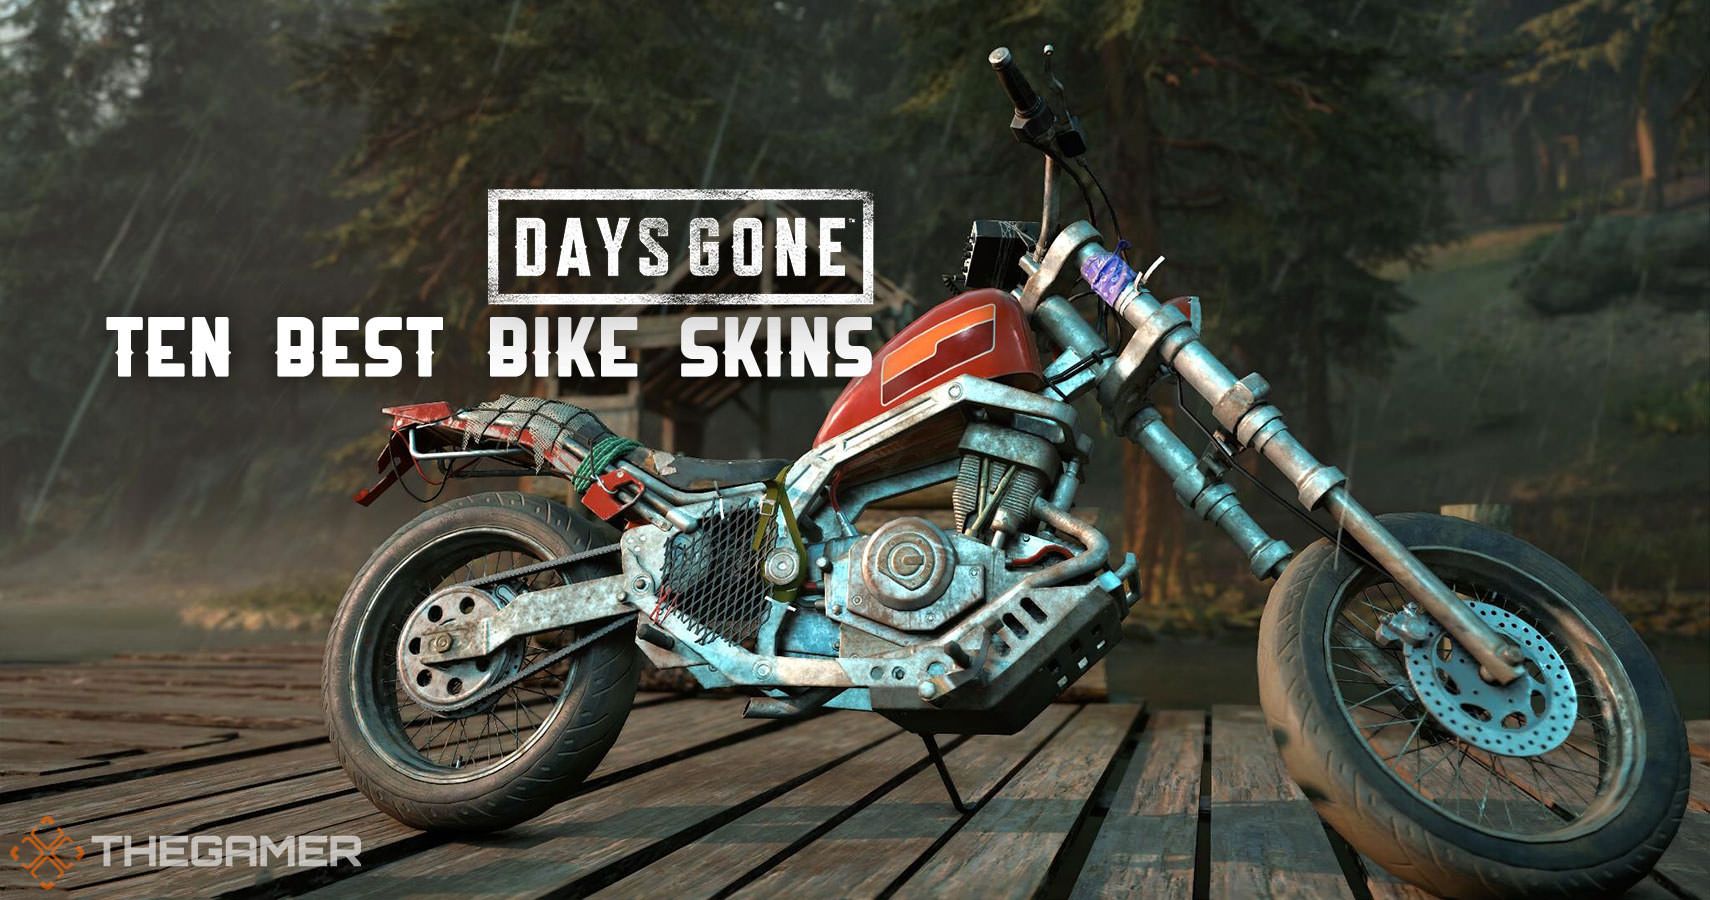 Days gone bike. Days gone байк. Рация мотоцикл Days gone. Days gone best Bike. Скин на мотоцикл фэйд ласт дей.